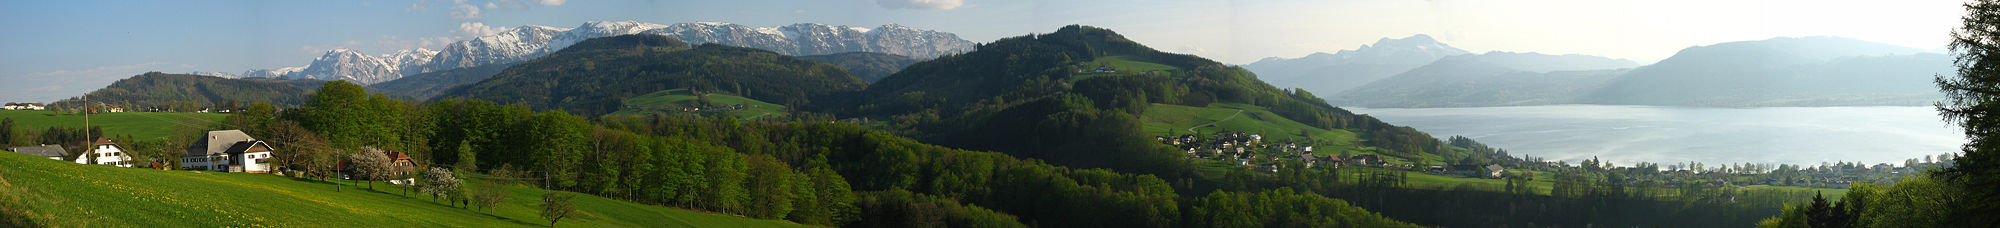 Panorama Höllengebirge mit Attersee